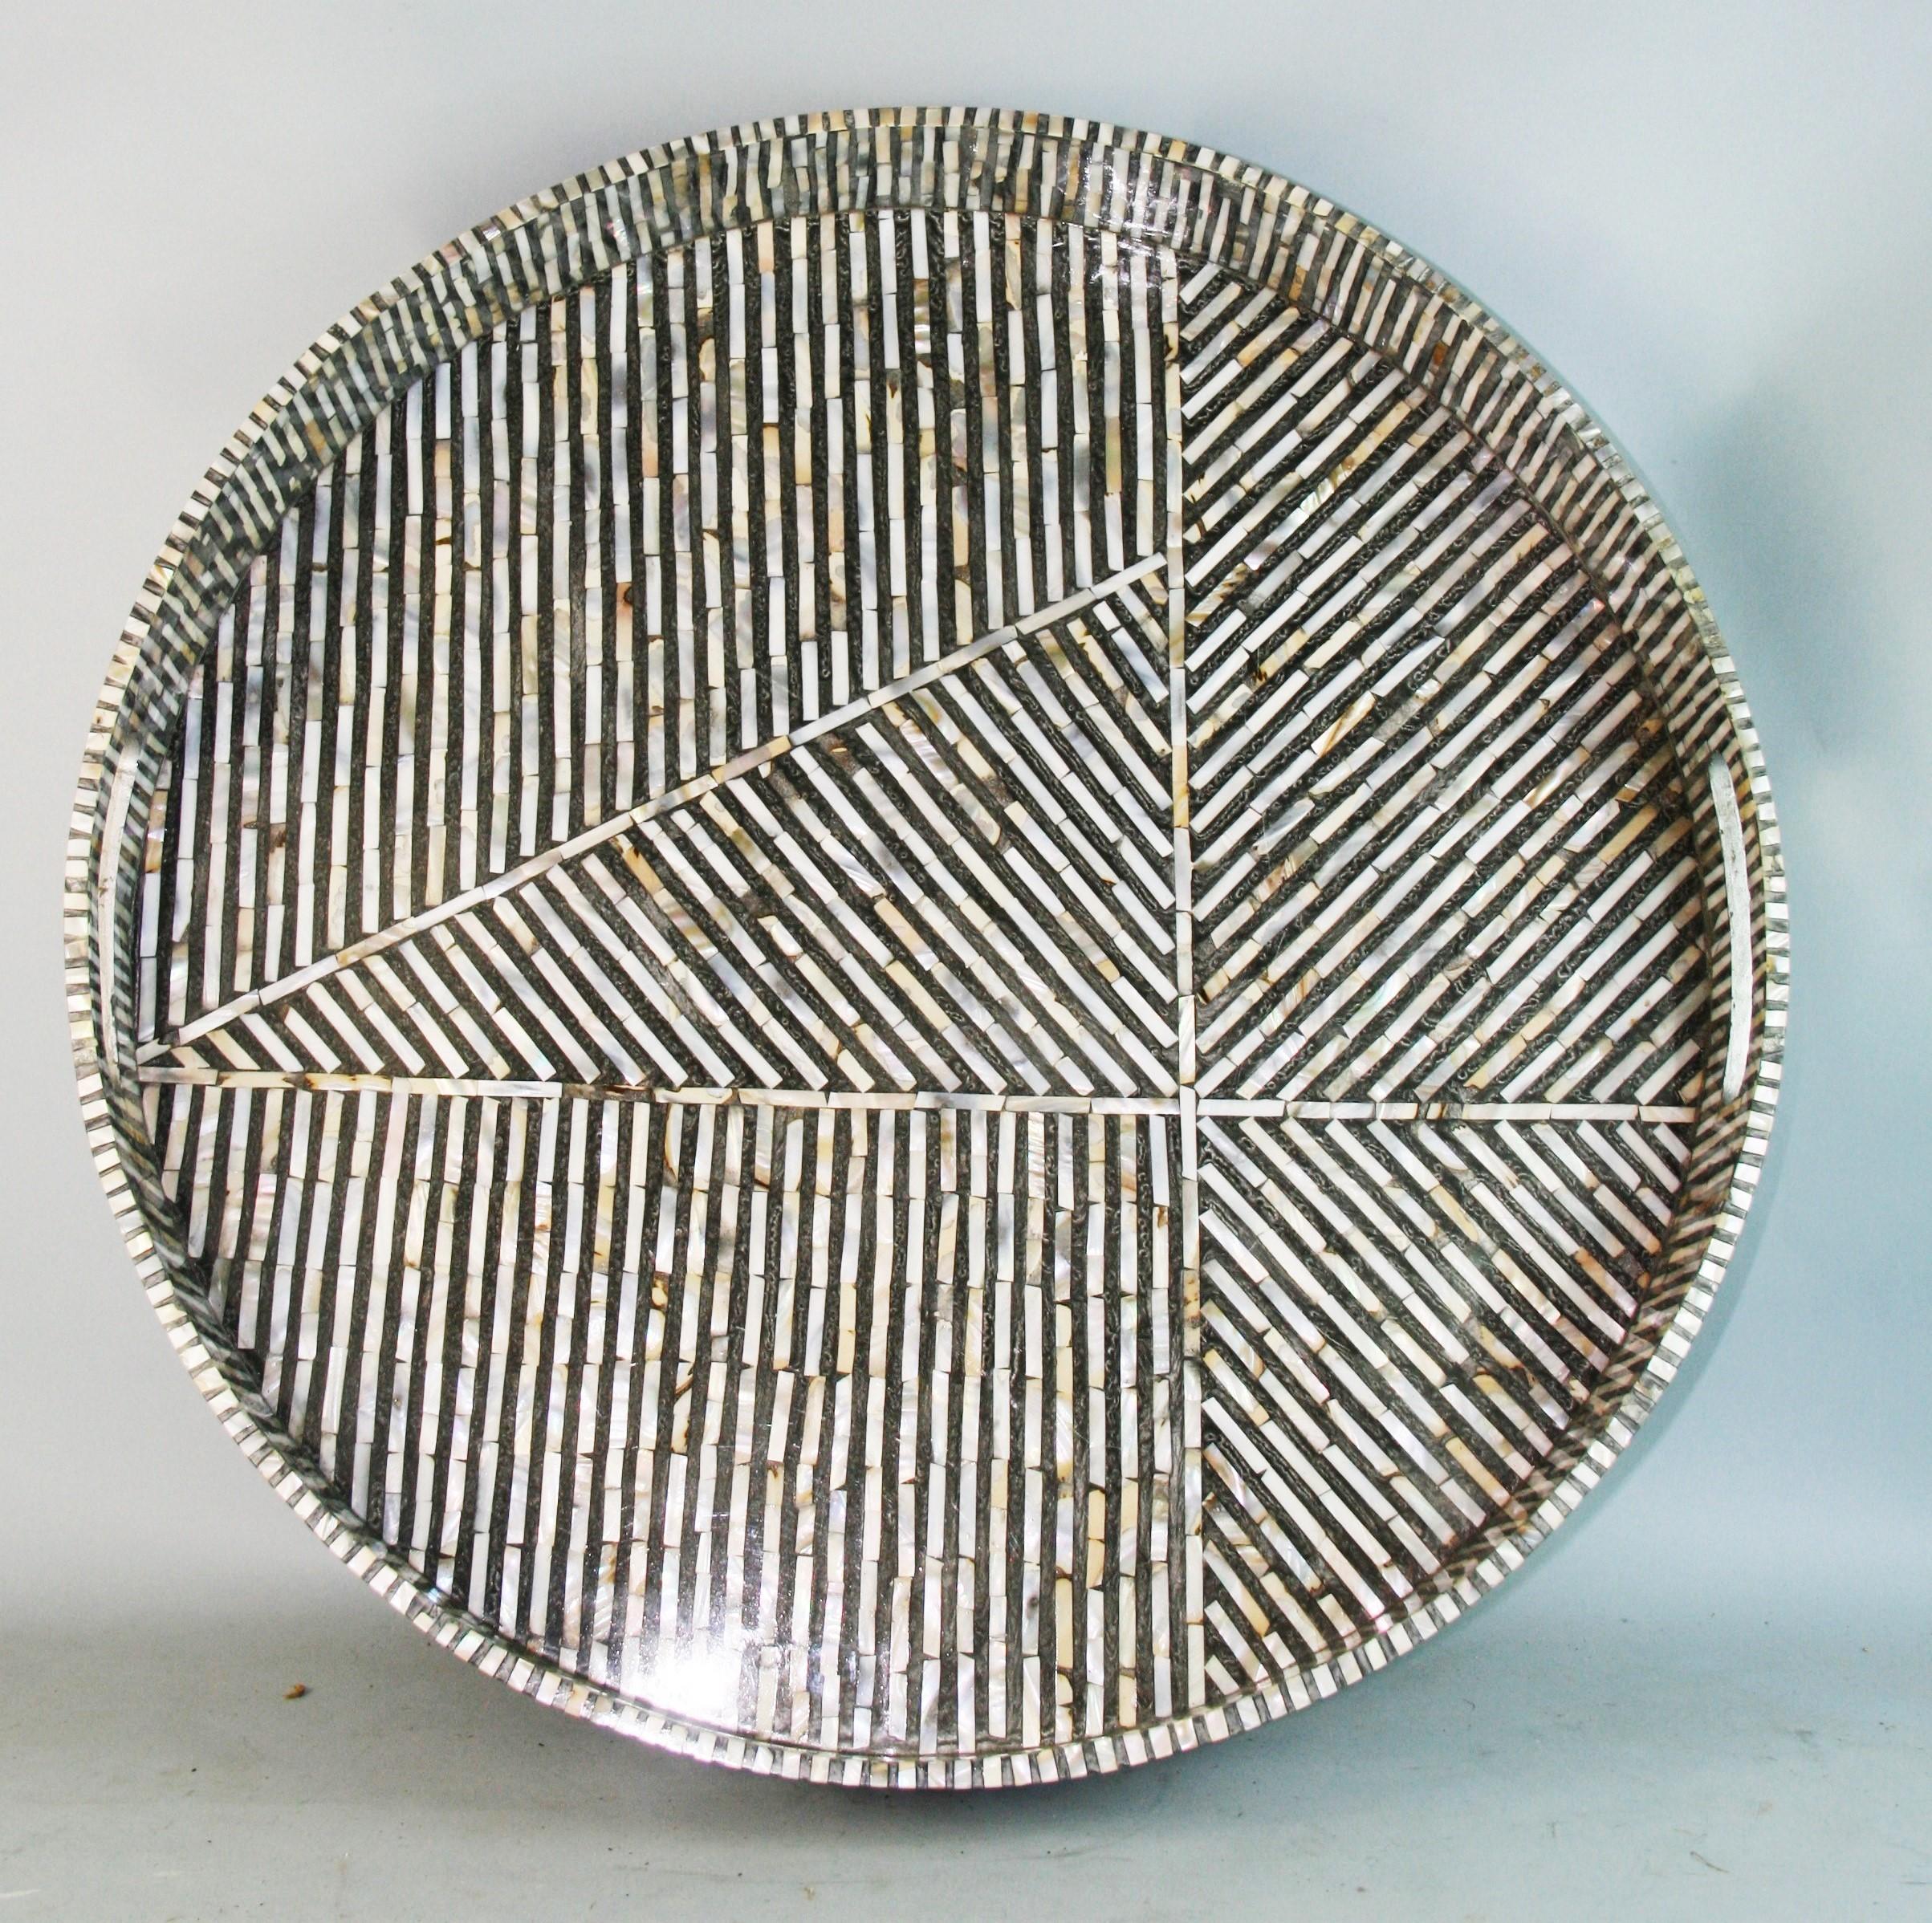 1503 MCM round geometric pattern serving tray